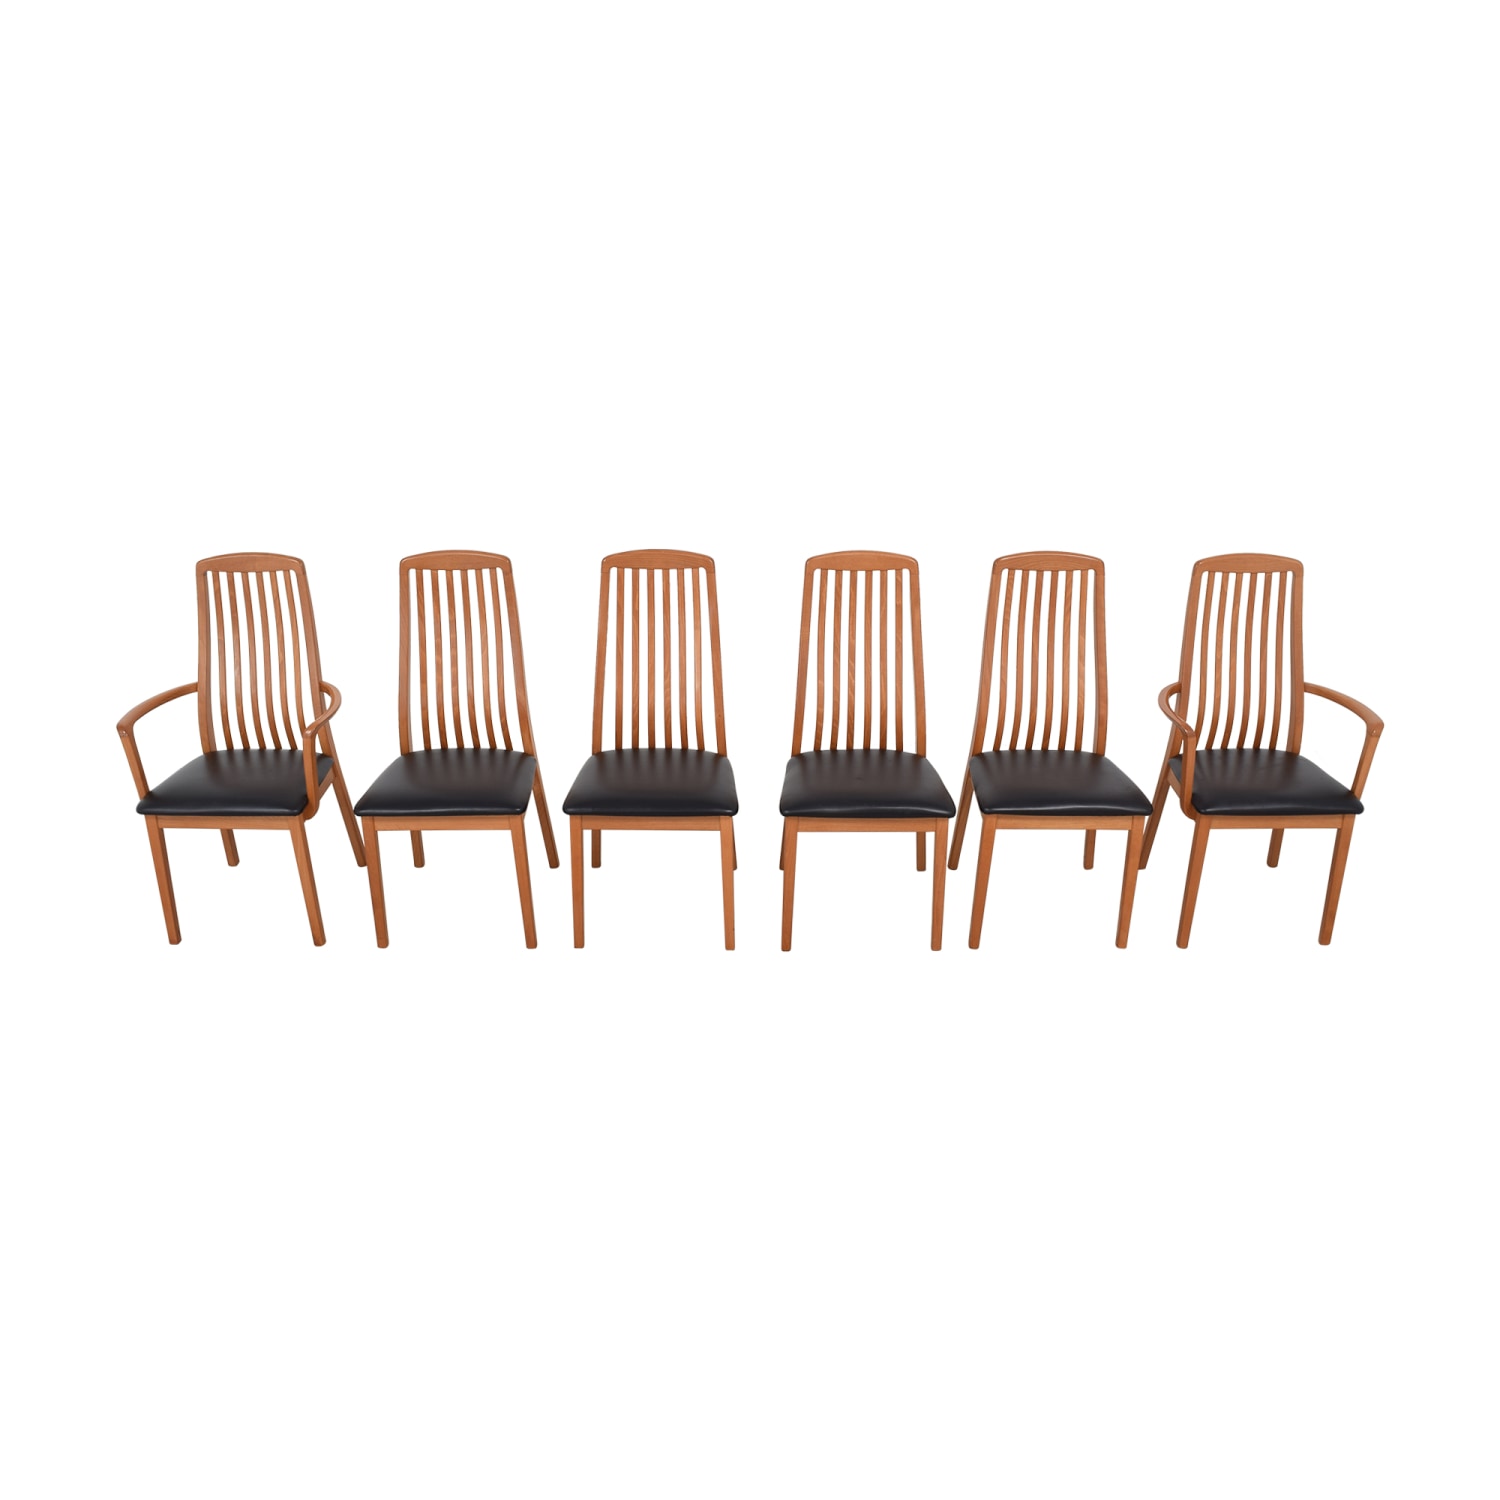 SA A. Sibau SA A. Sibau Italian Upholstered Dining Chairs Chairs